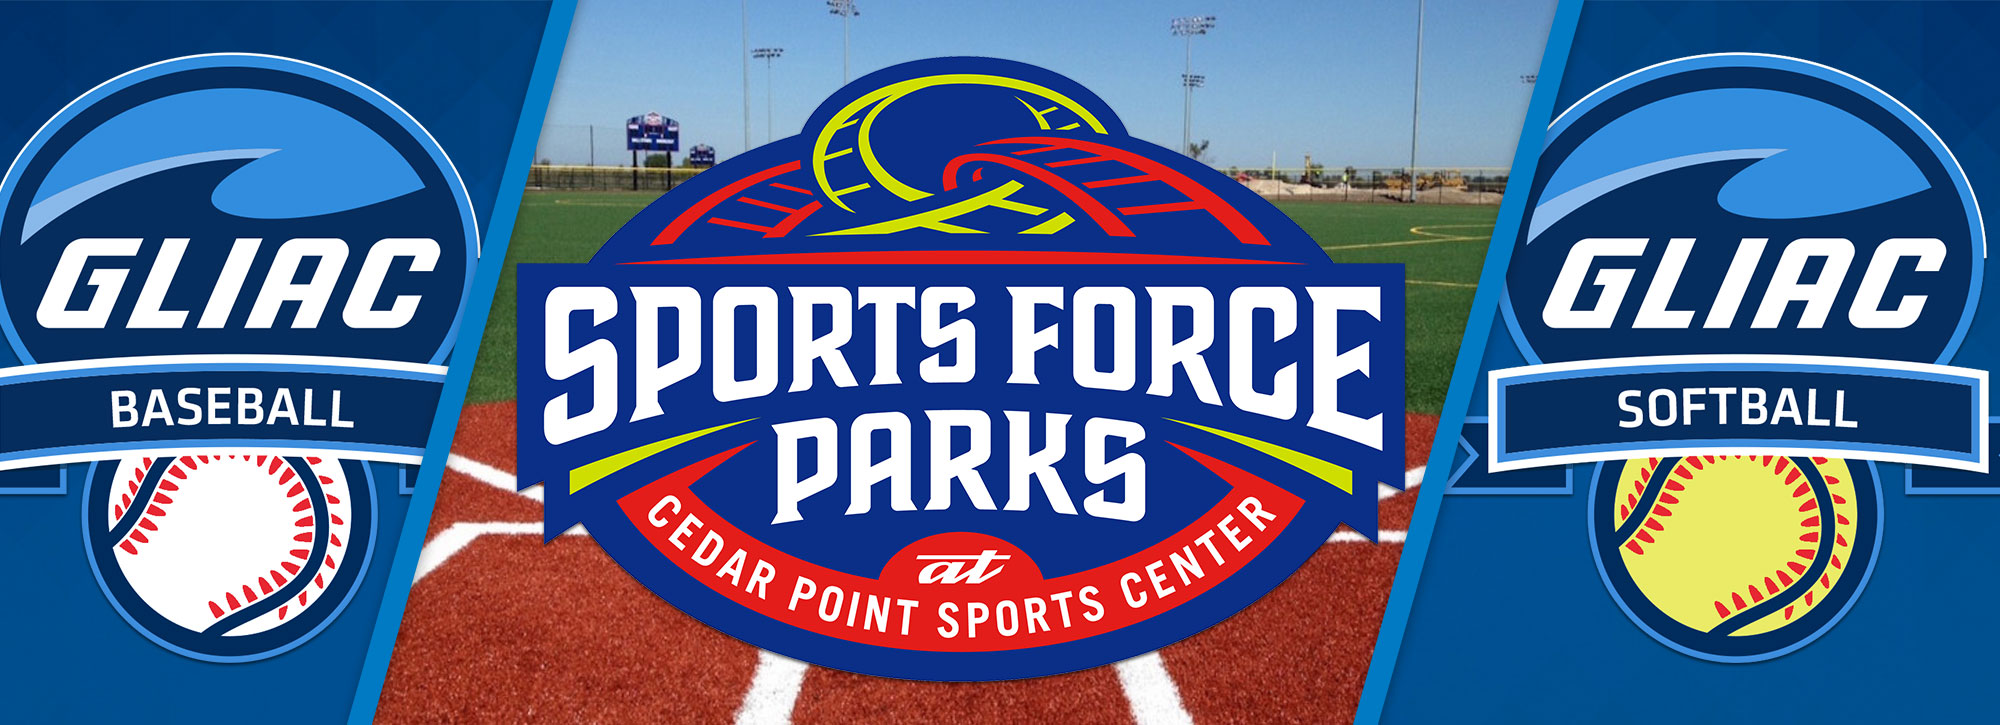 Sports Force Parks to Host GLIAC Baseball & Softball Tournaments